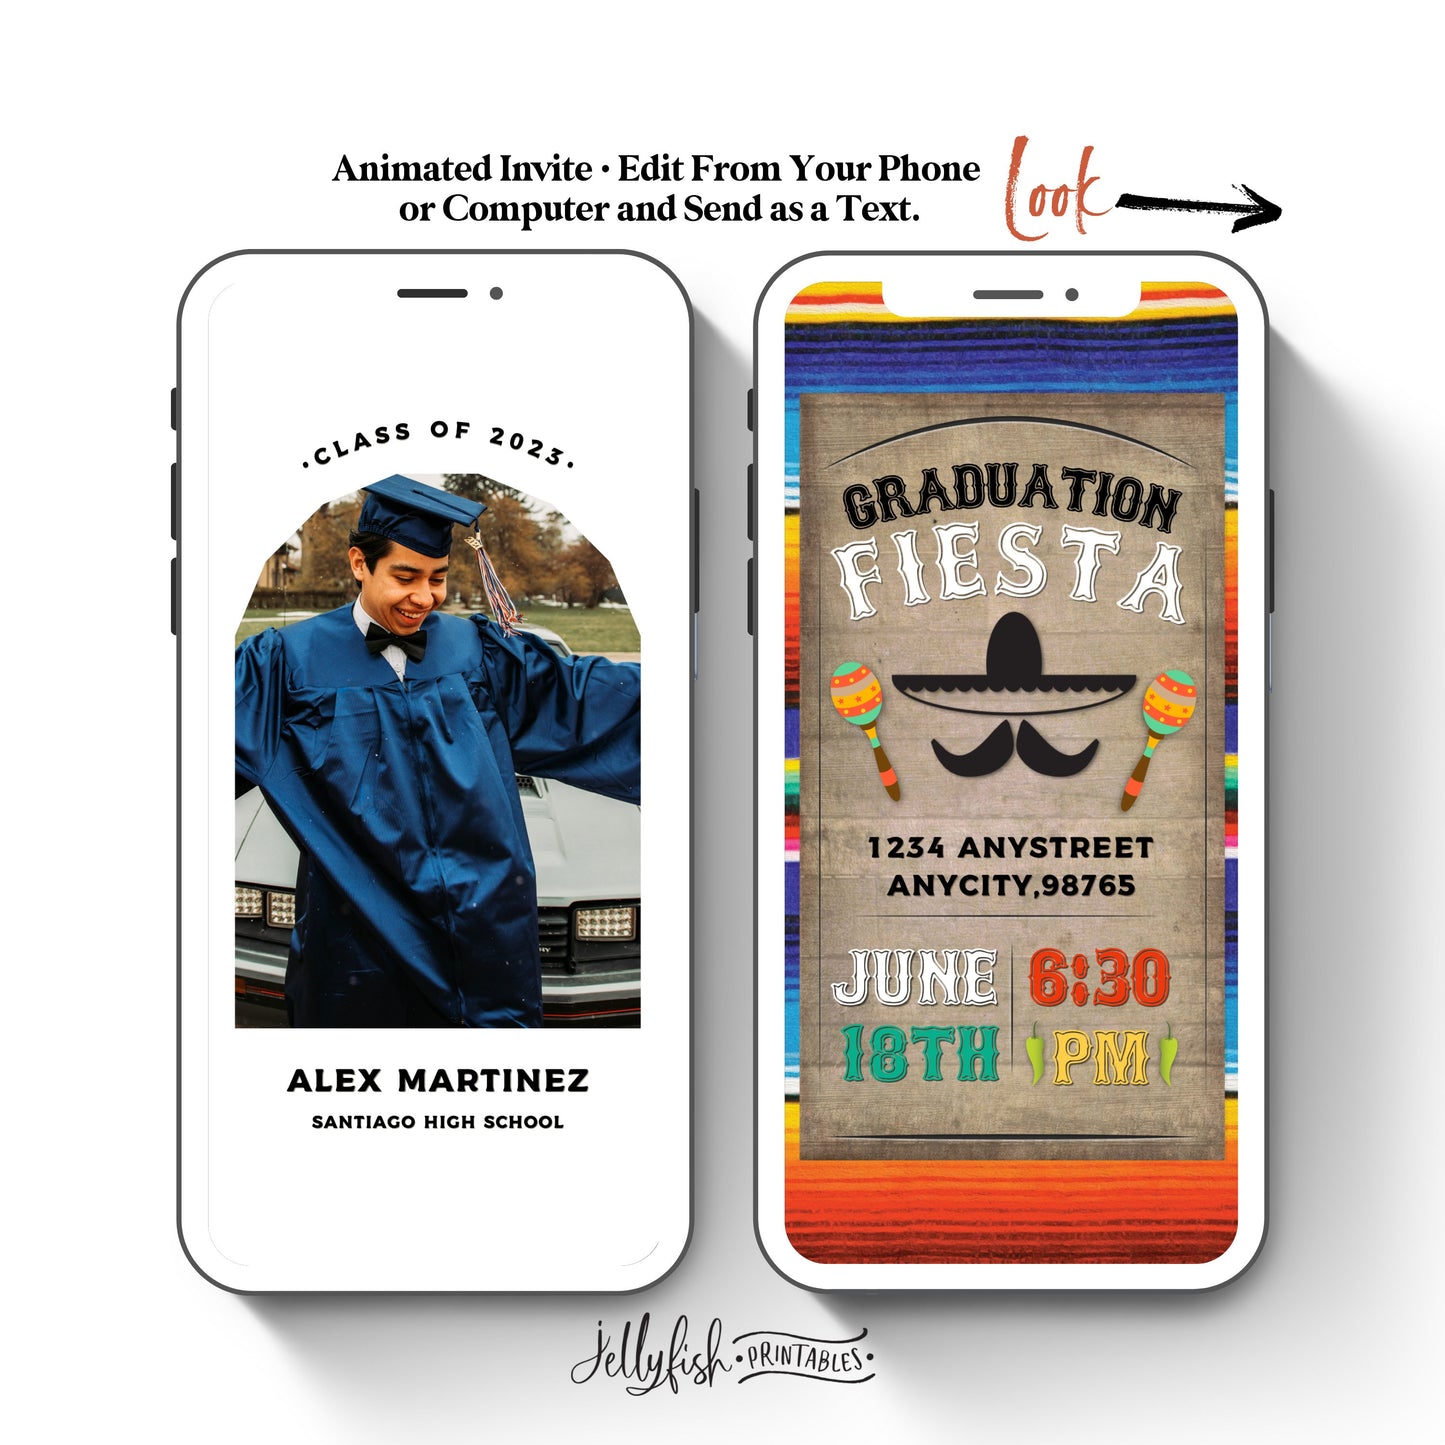 Animated Fiesta Graduation Invitation Canva Template. Send Today!